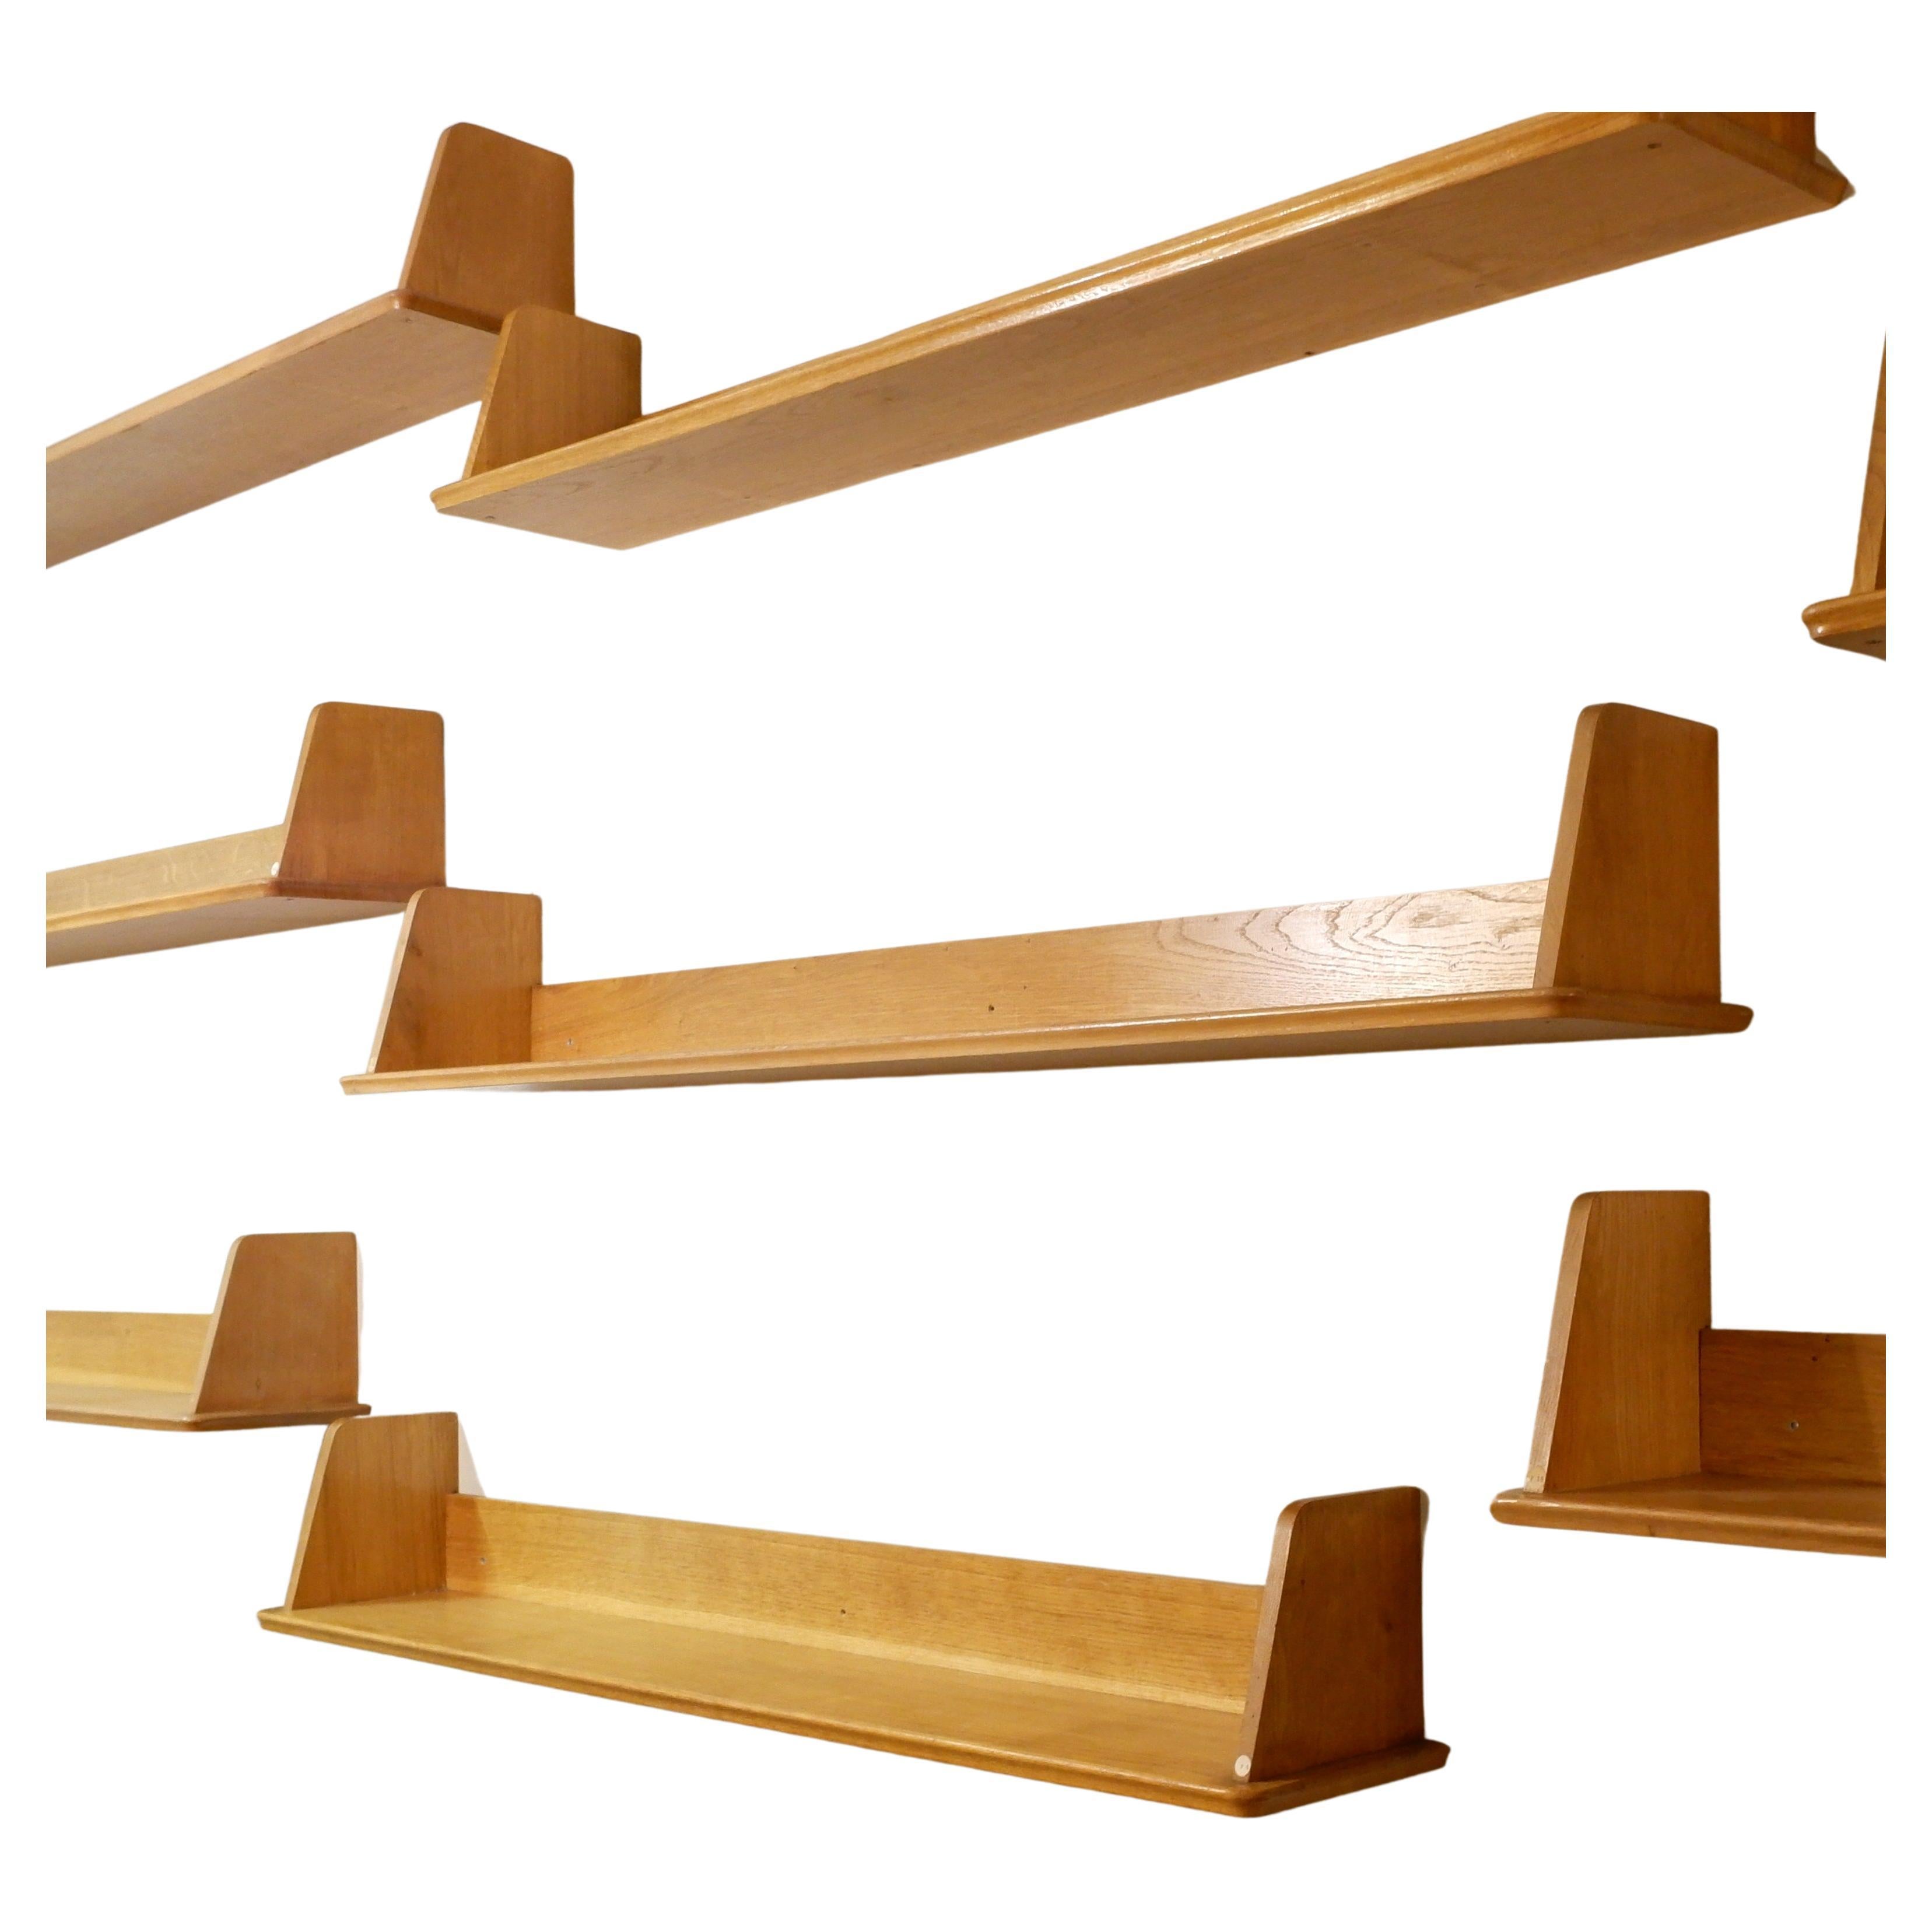 Nine wooden wall shelves